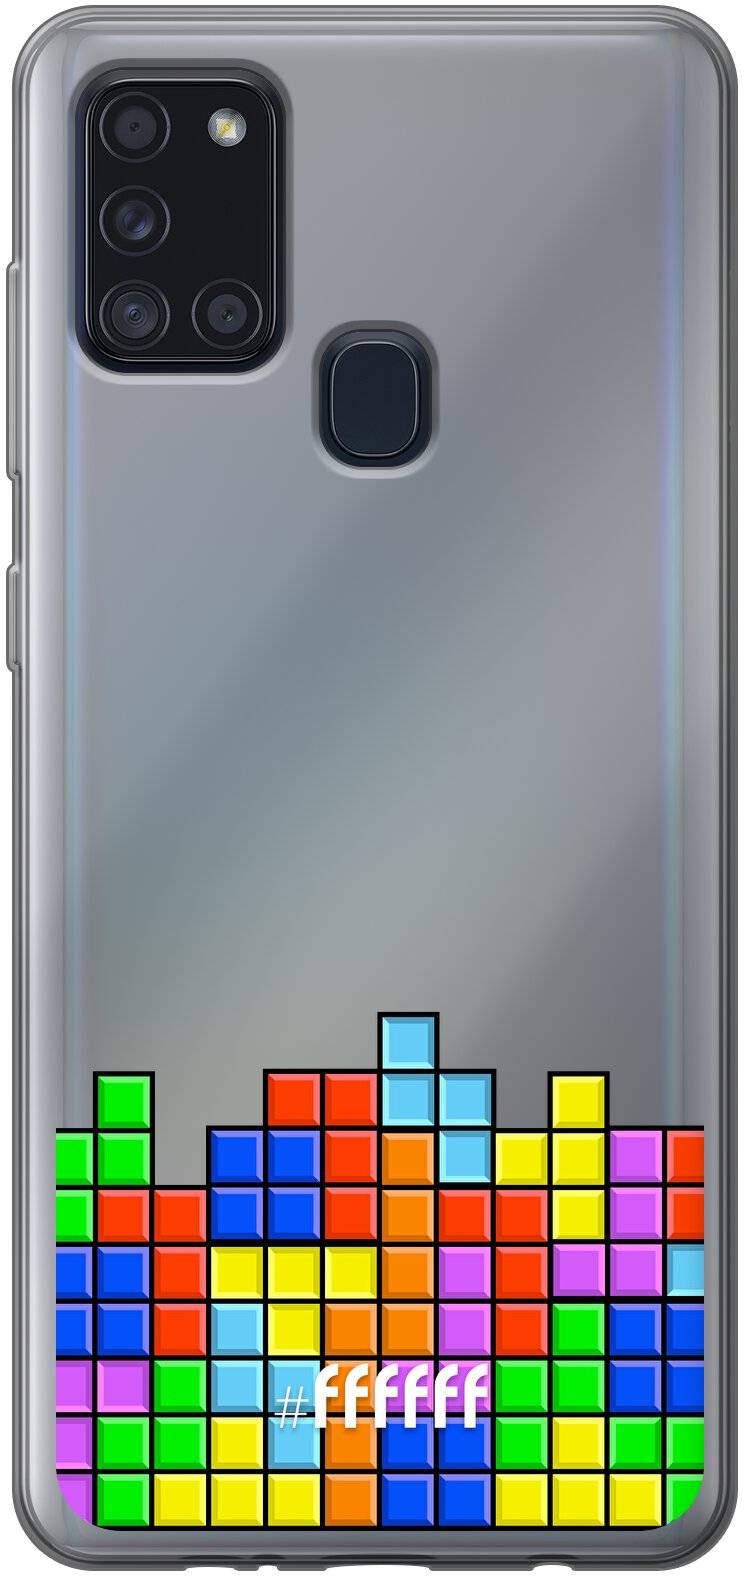 Tetris Galaxy A21s